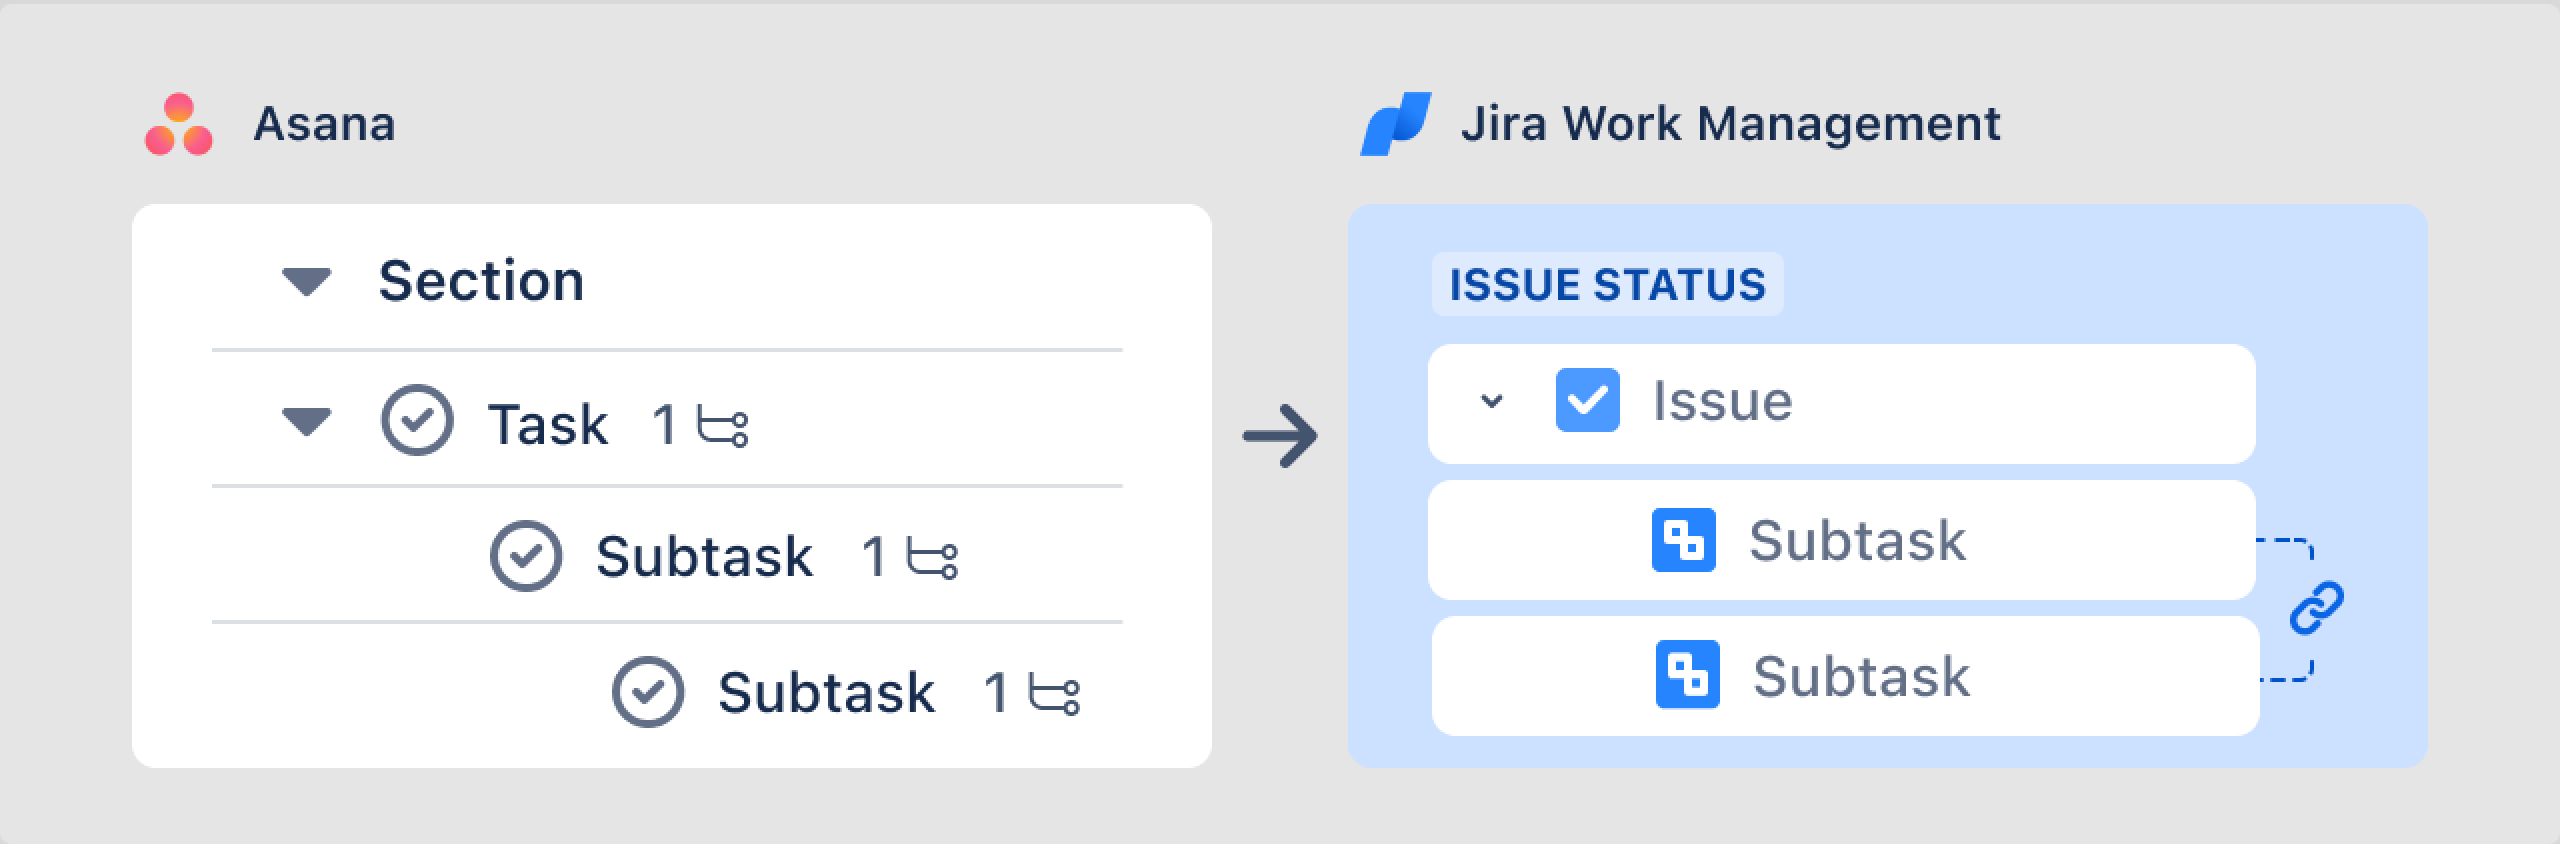 Jira Work Management に Asana のフィールドがどのようにマッピングされるかの図解。